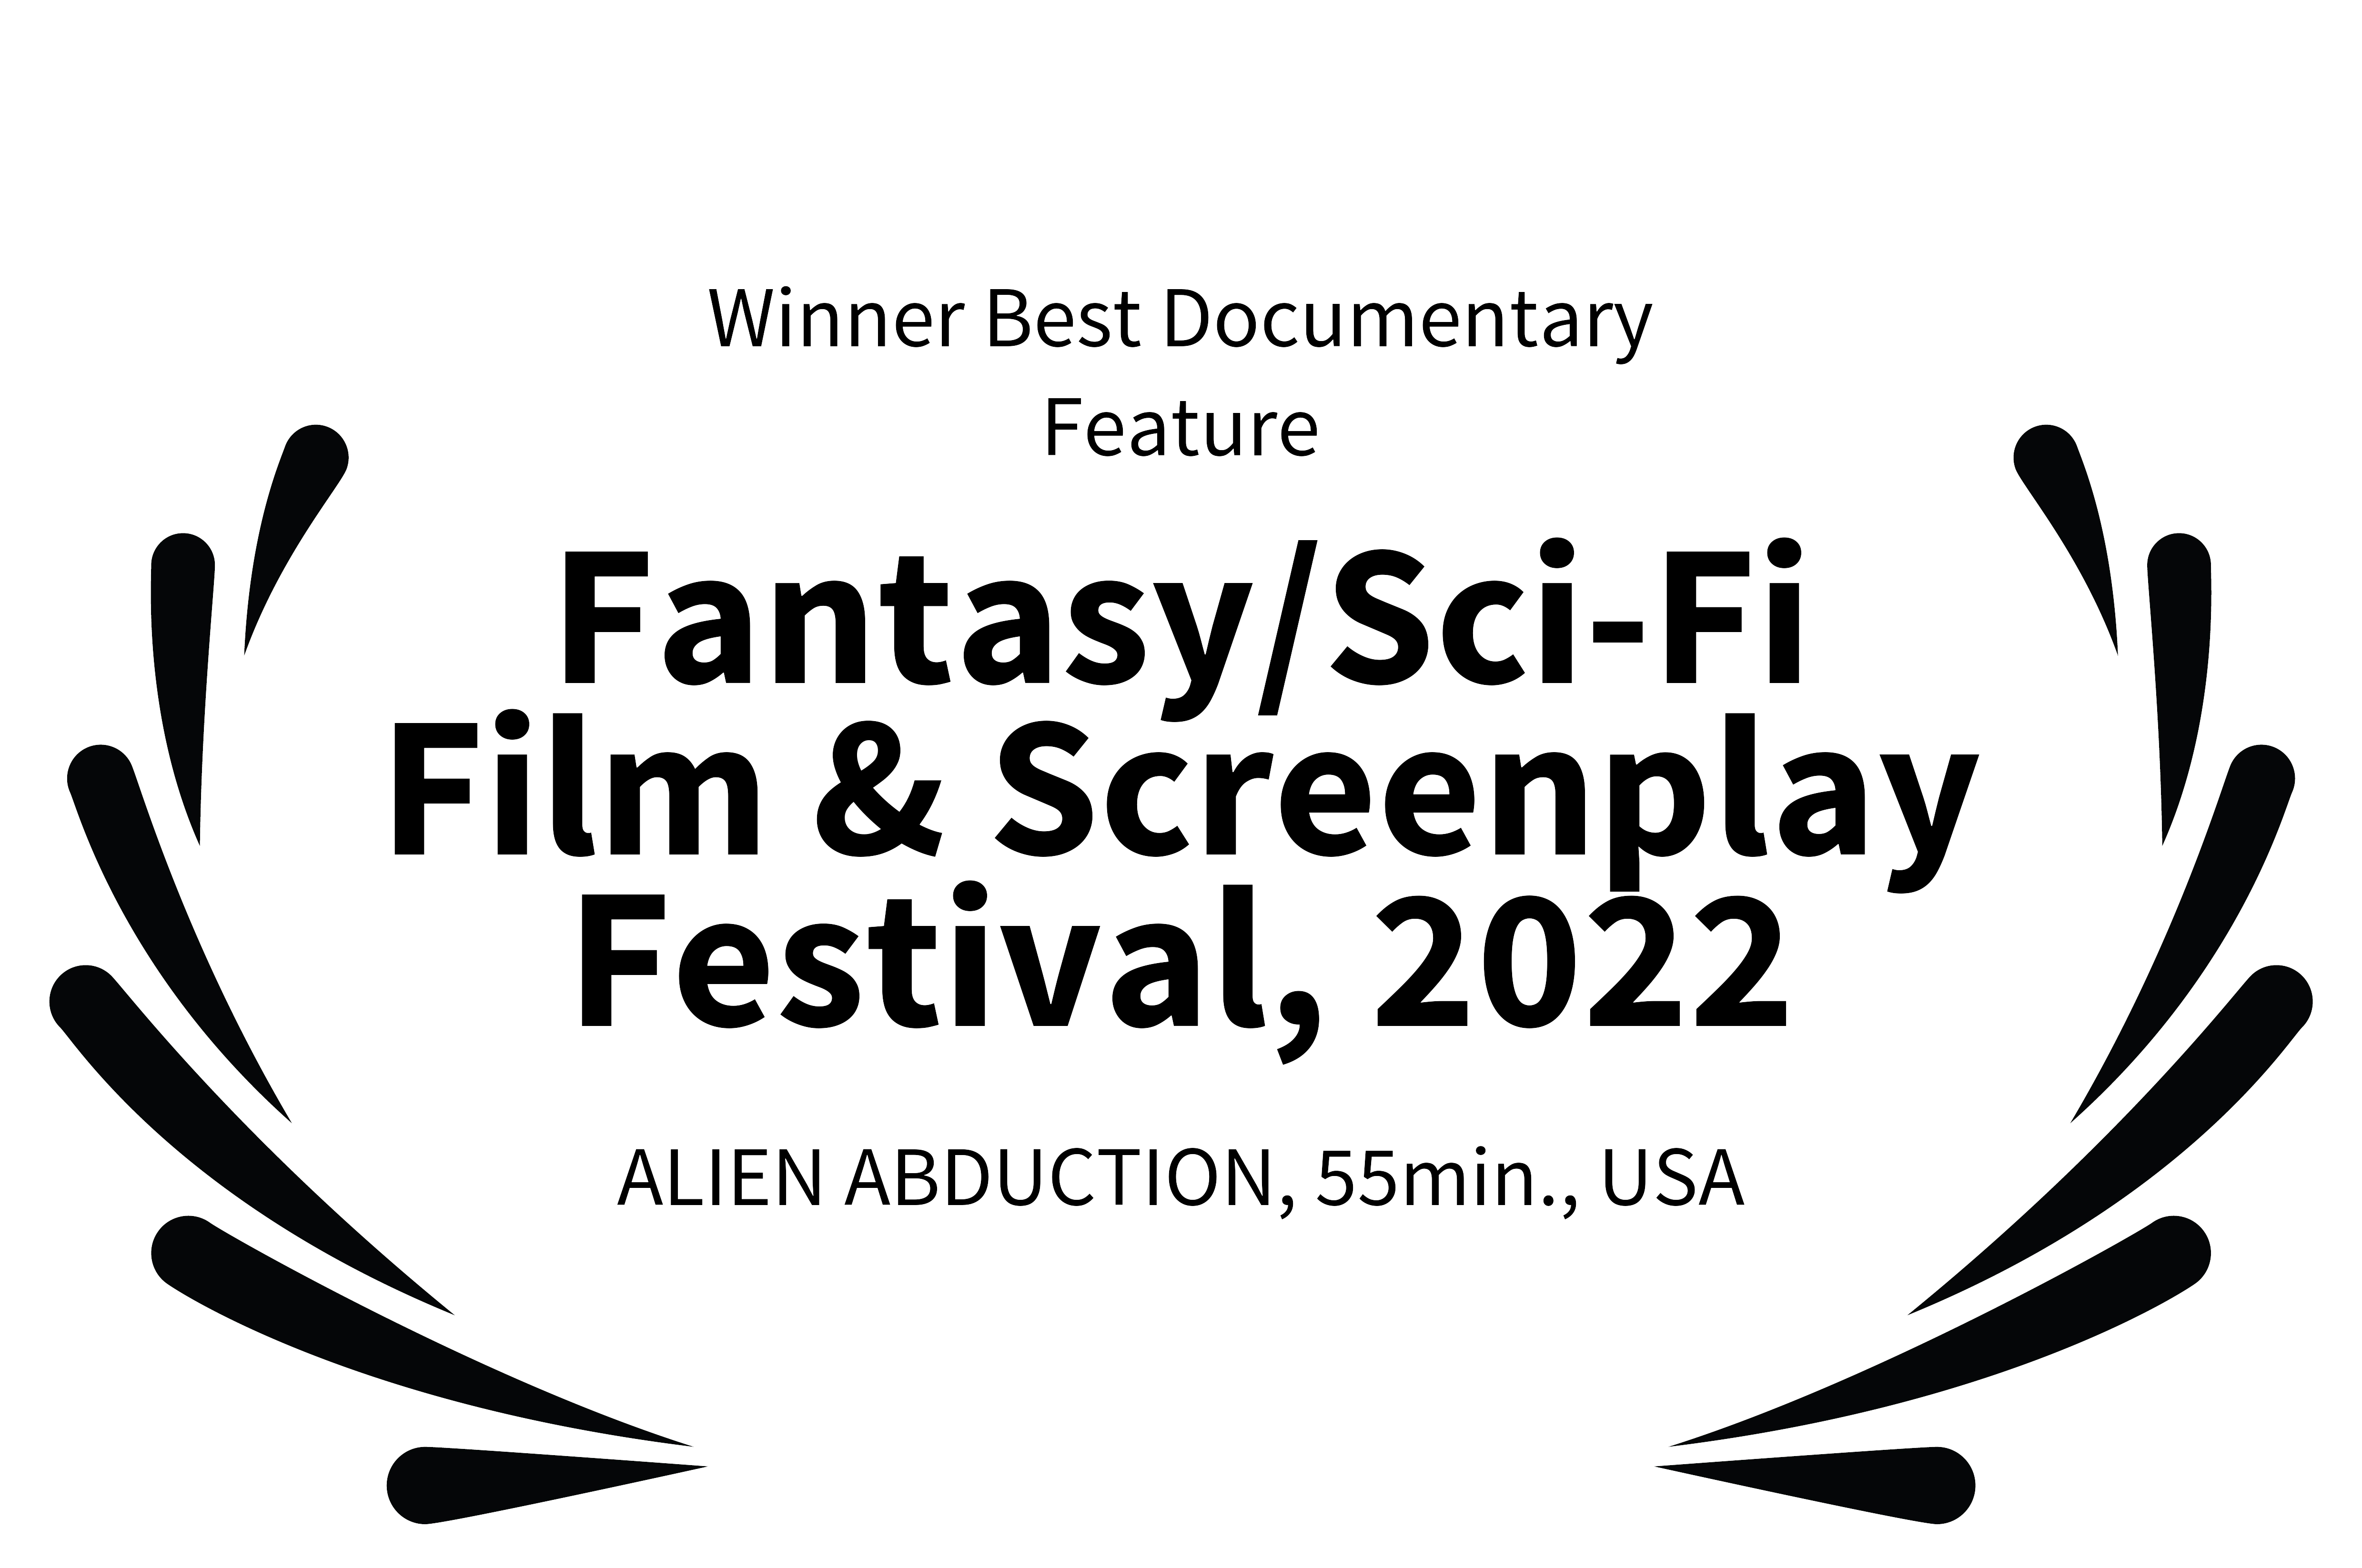 WinnerBestDocumentaryFeature-FantasySci-FiFilmScreenplayFestival2022-ALIENABDUCTION55min.USA